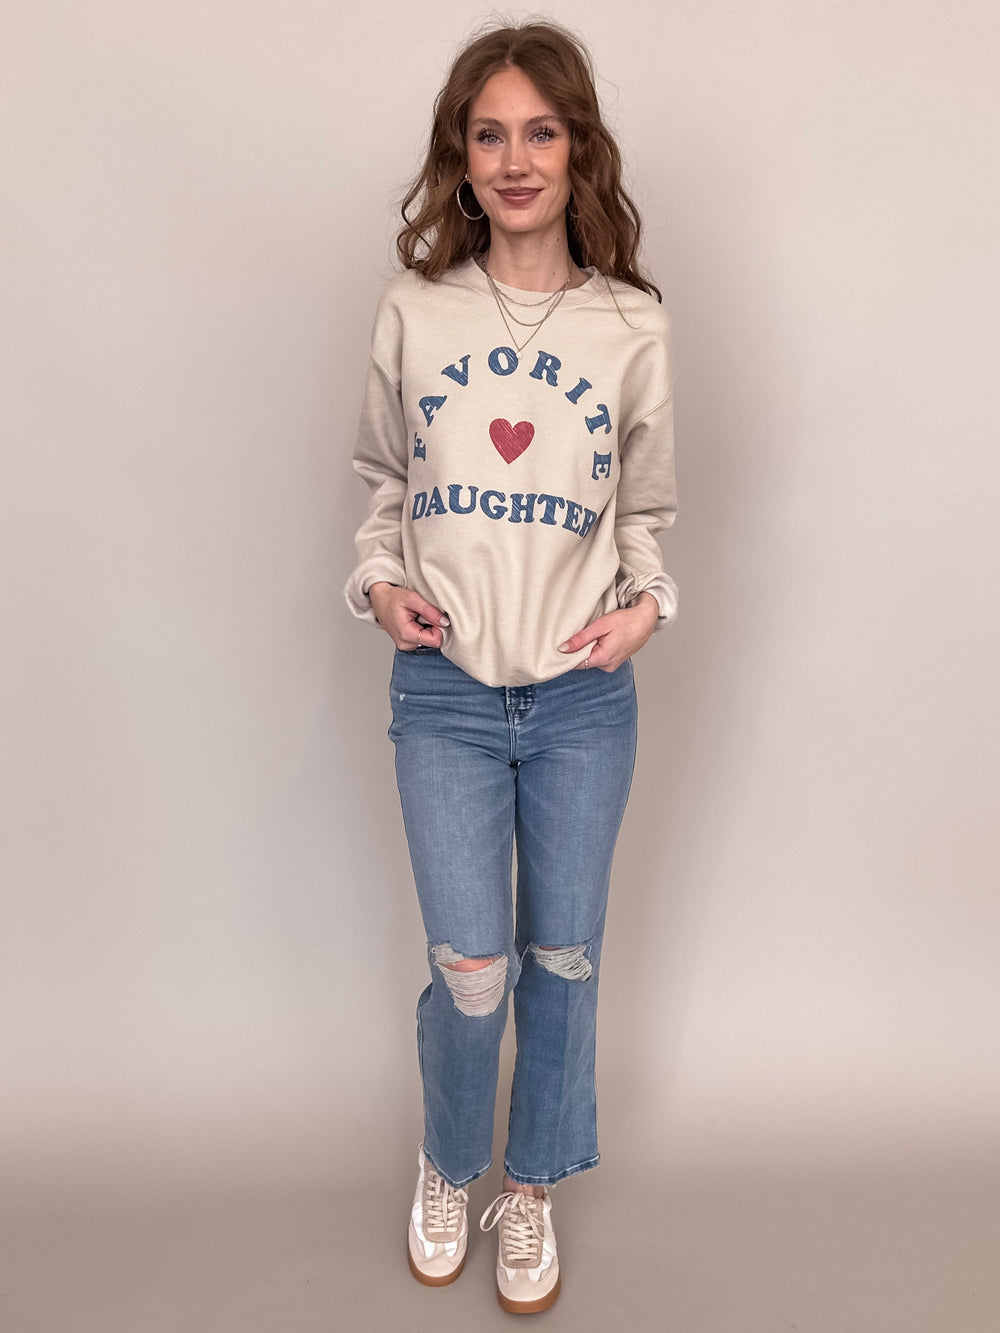 Favorite Daughter Graphic Sweatshirt